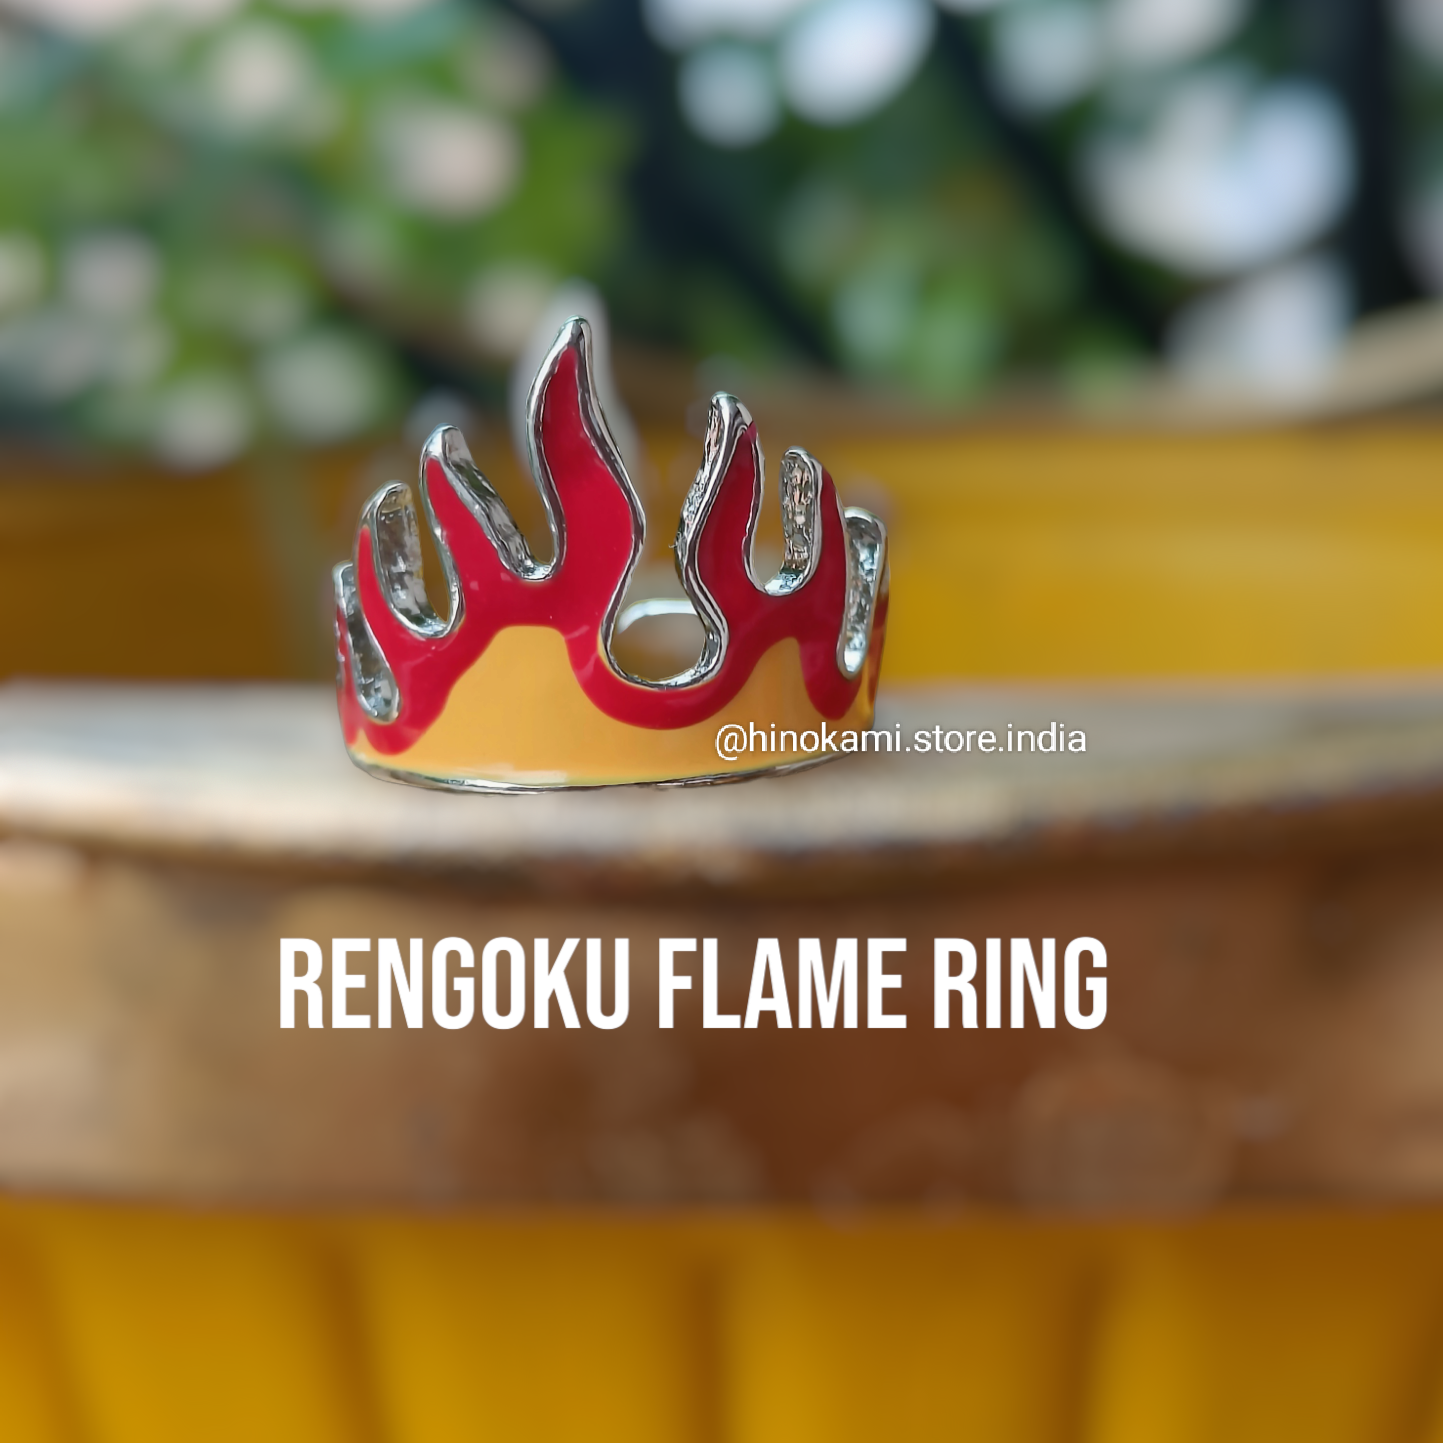 Rengoku flame ring